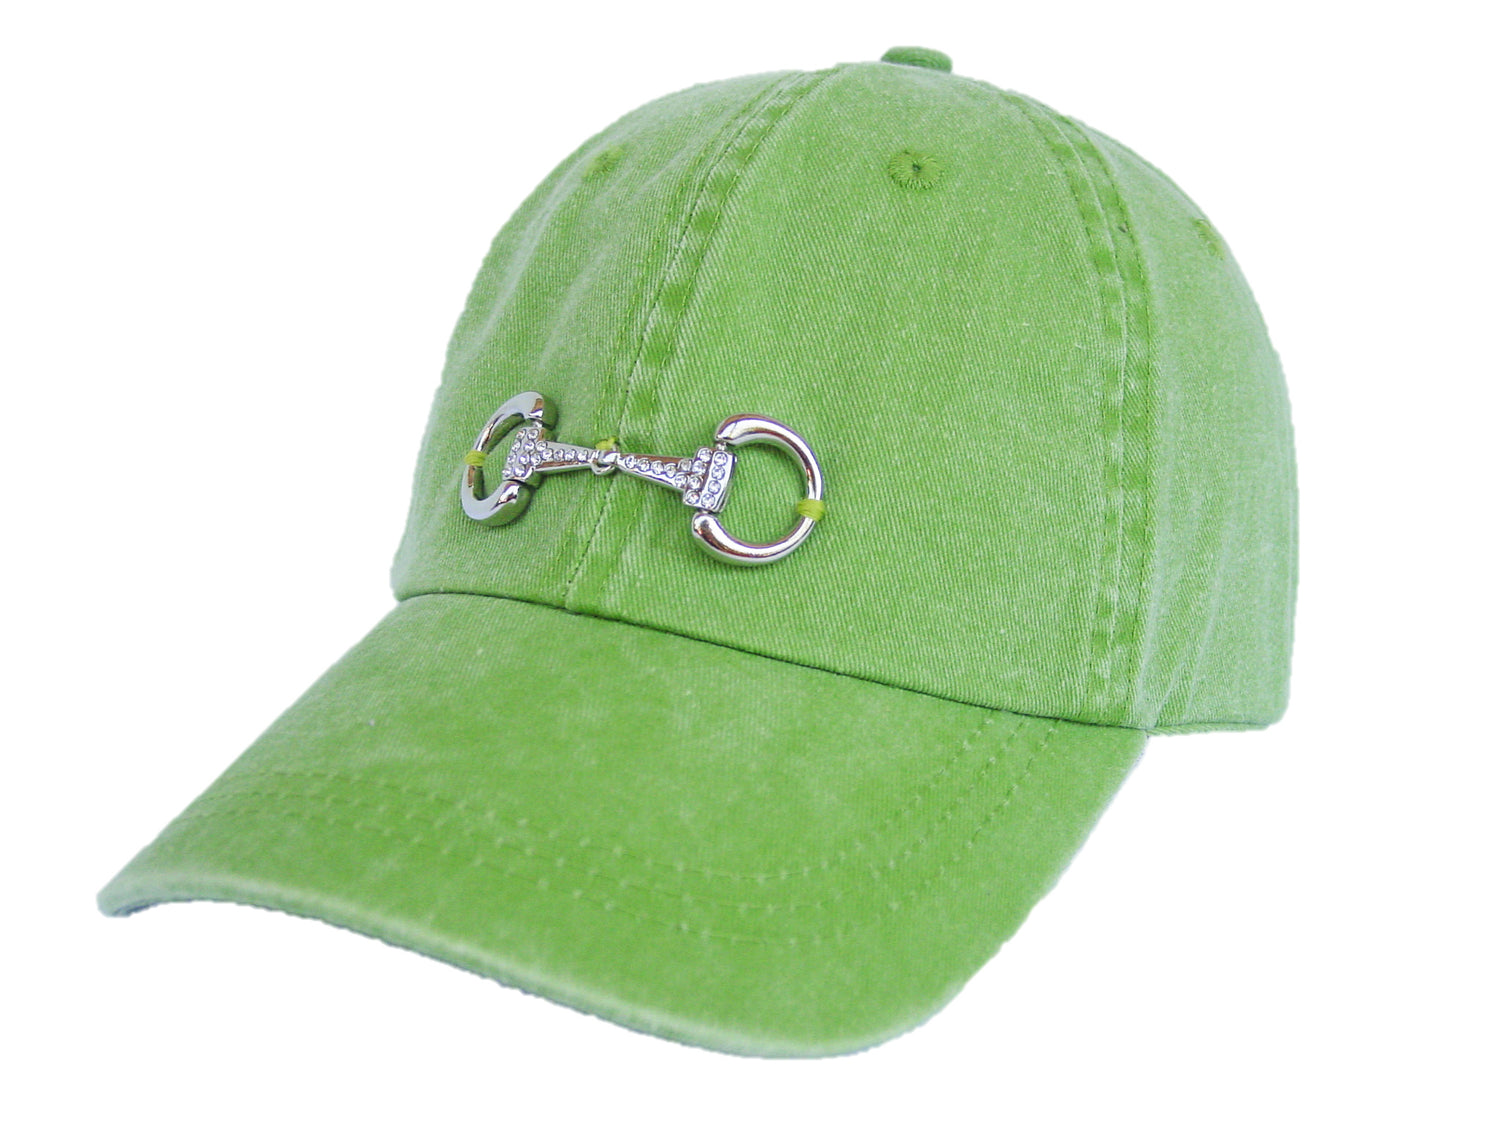 equestrian hat